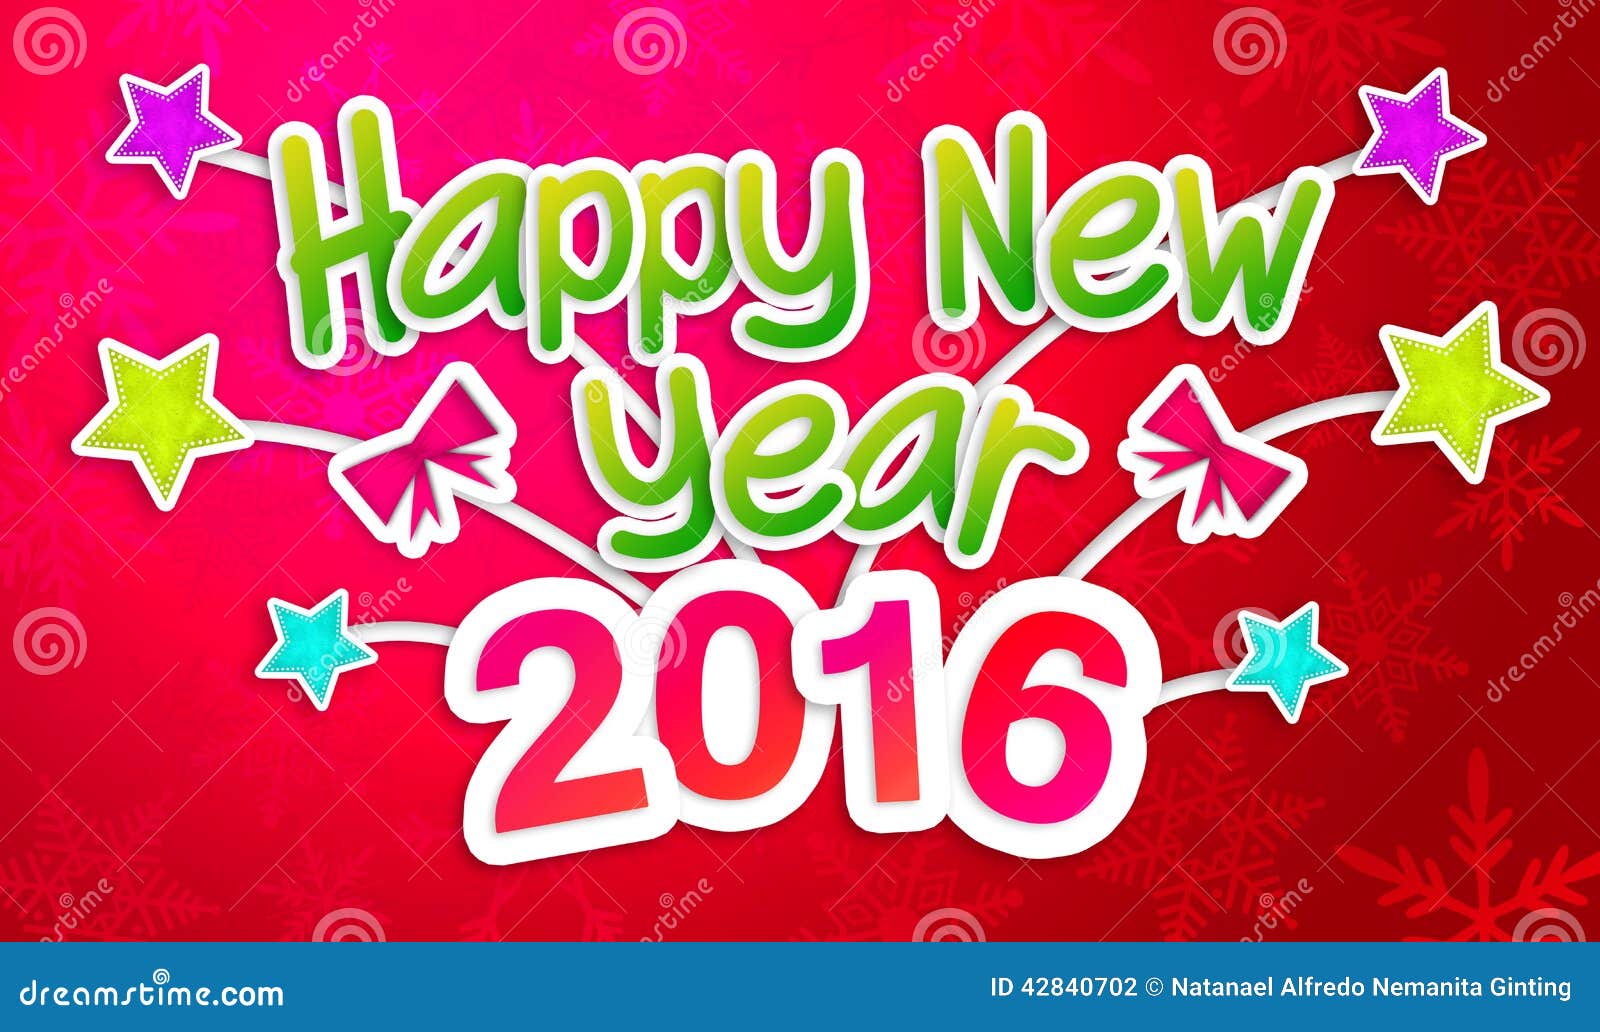 Red Happy New Year 2016 Greeting Art Paper Card - digital art.